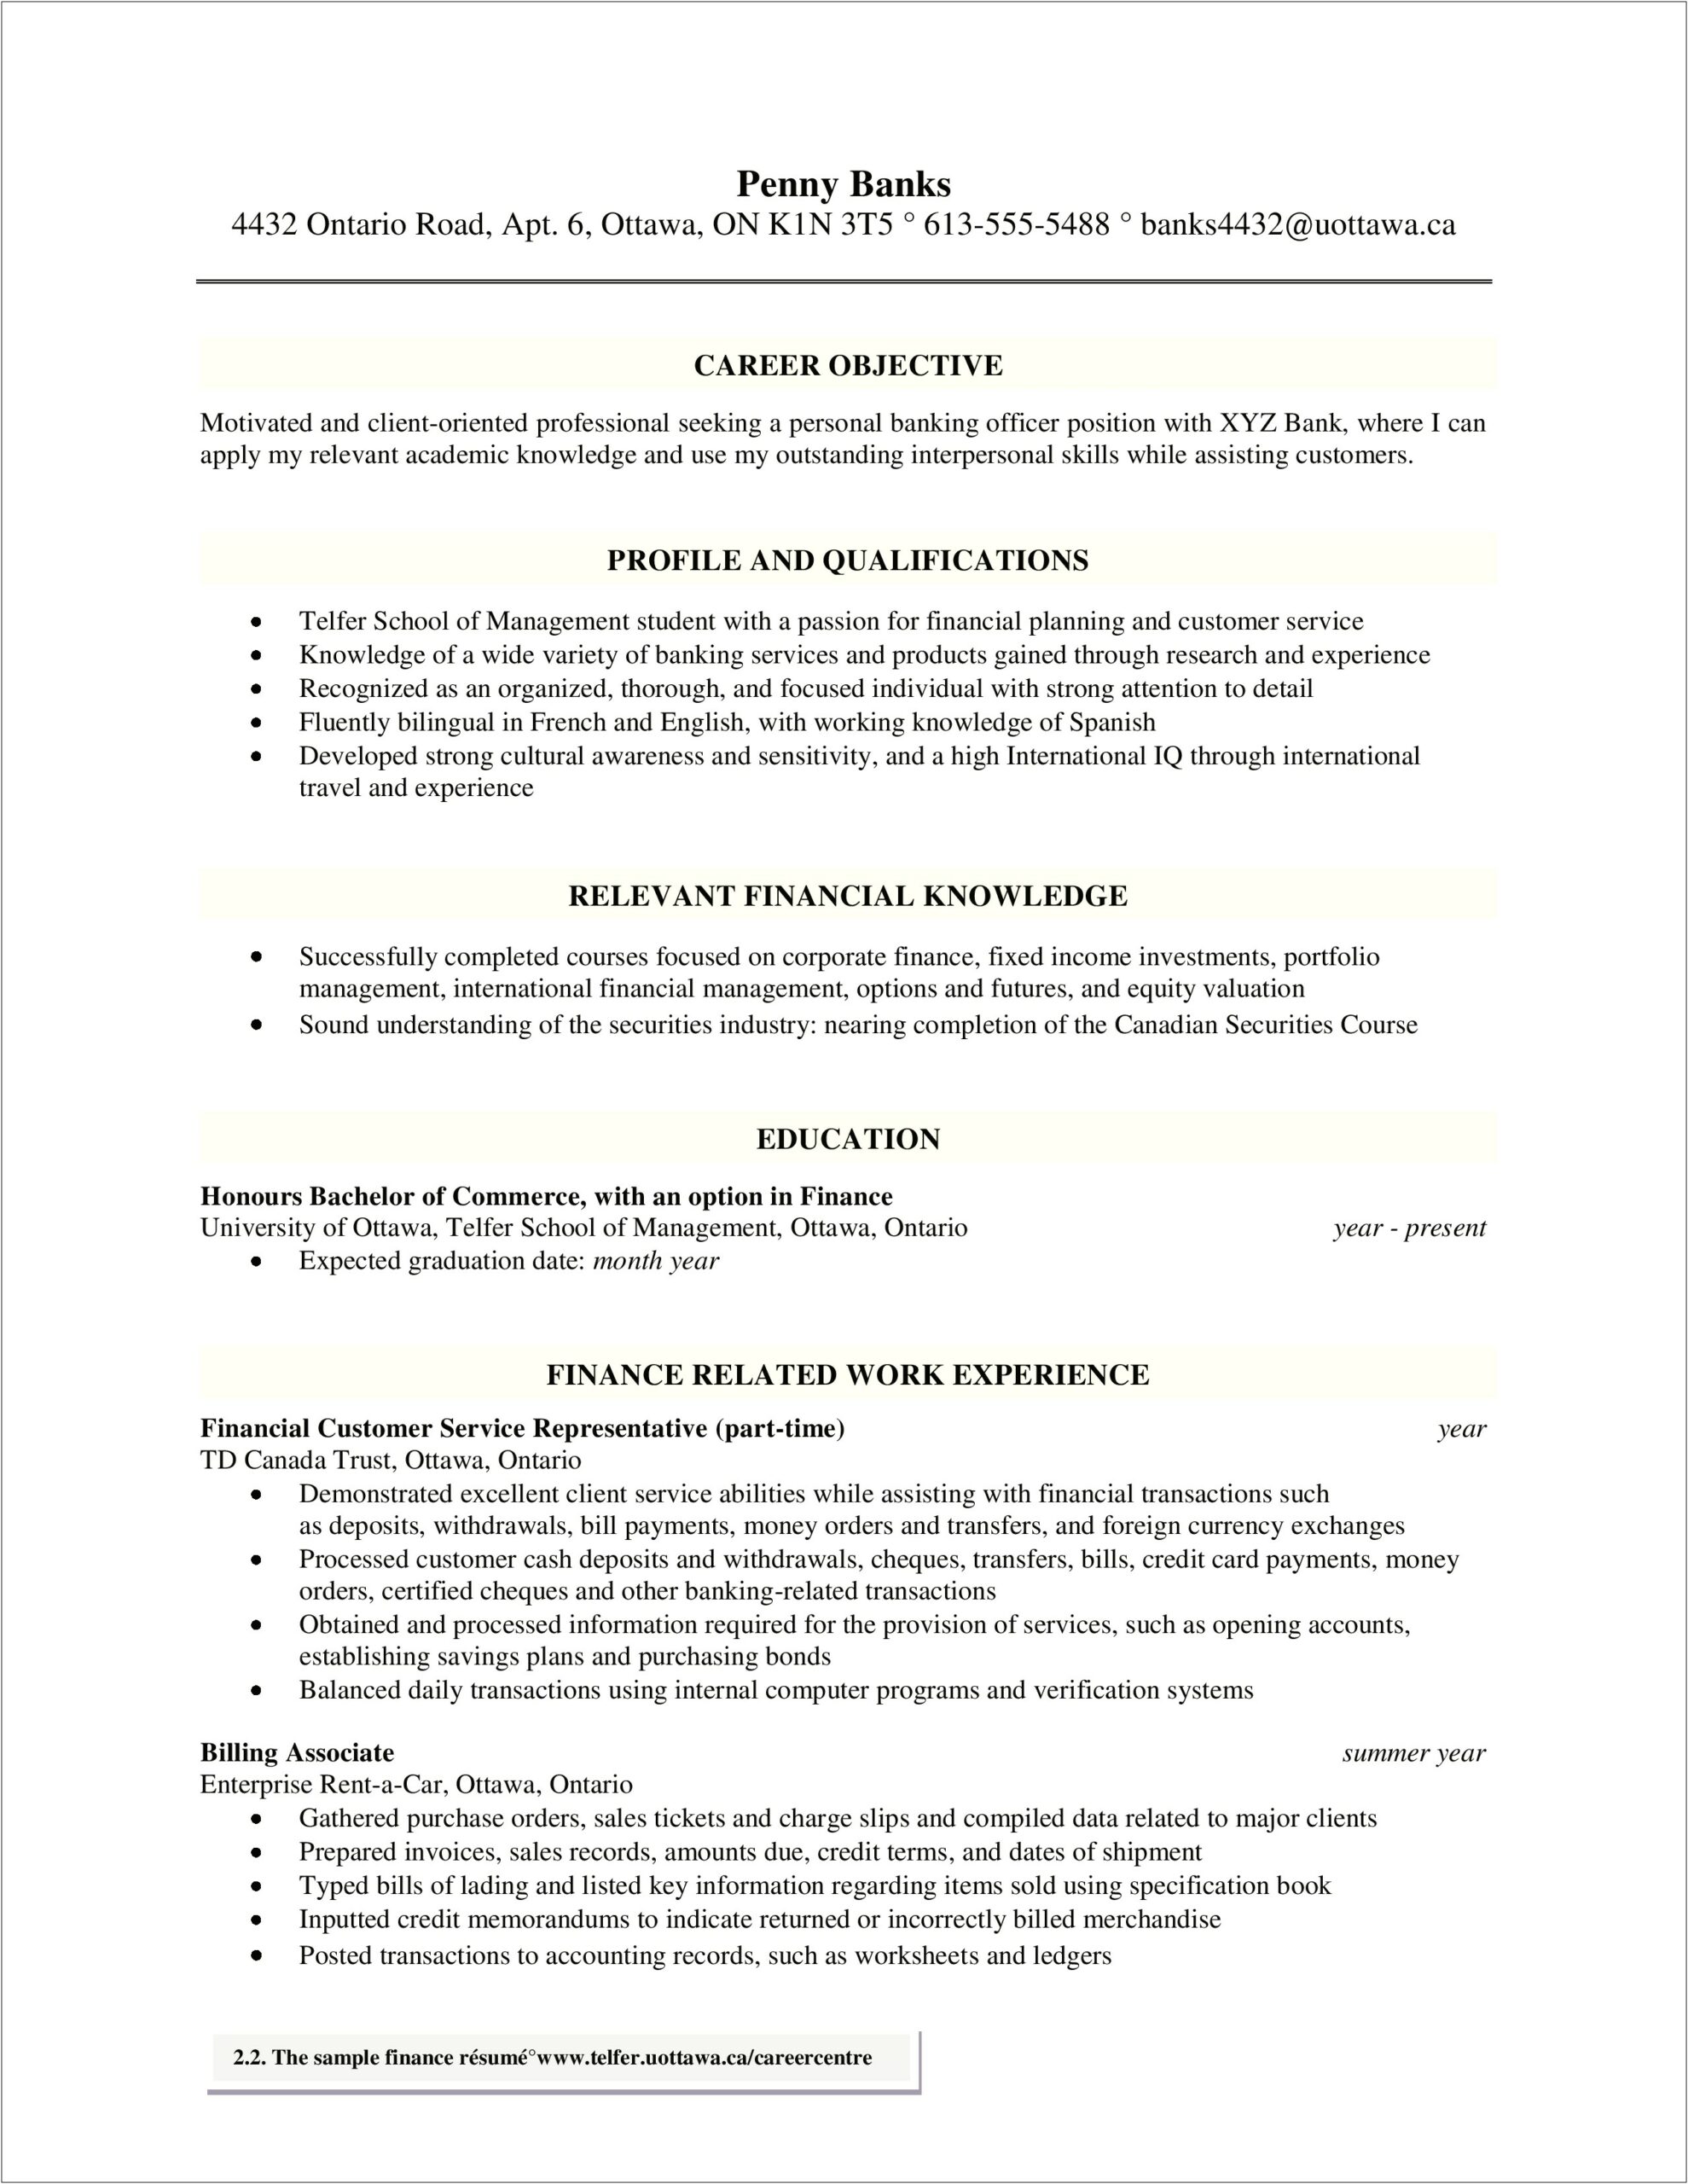 Sample Resume For Car Sales Agent